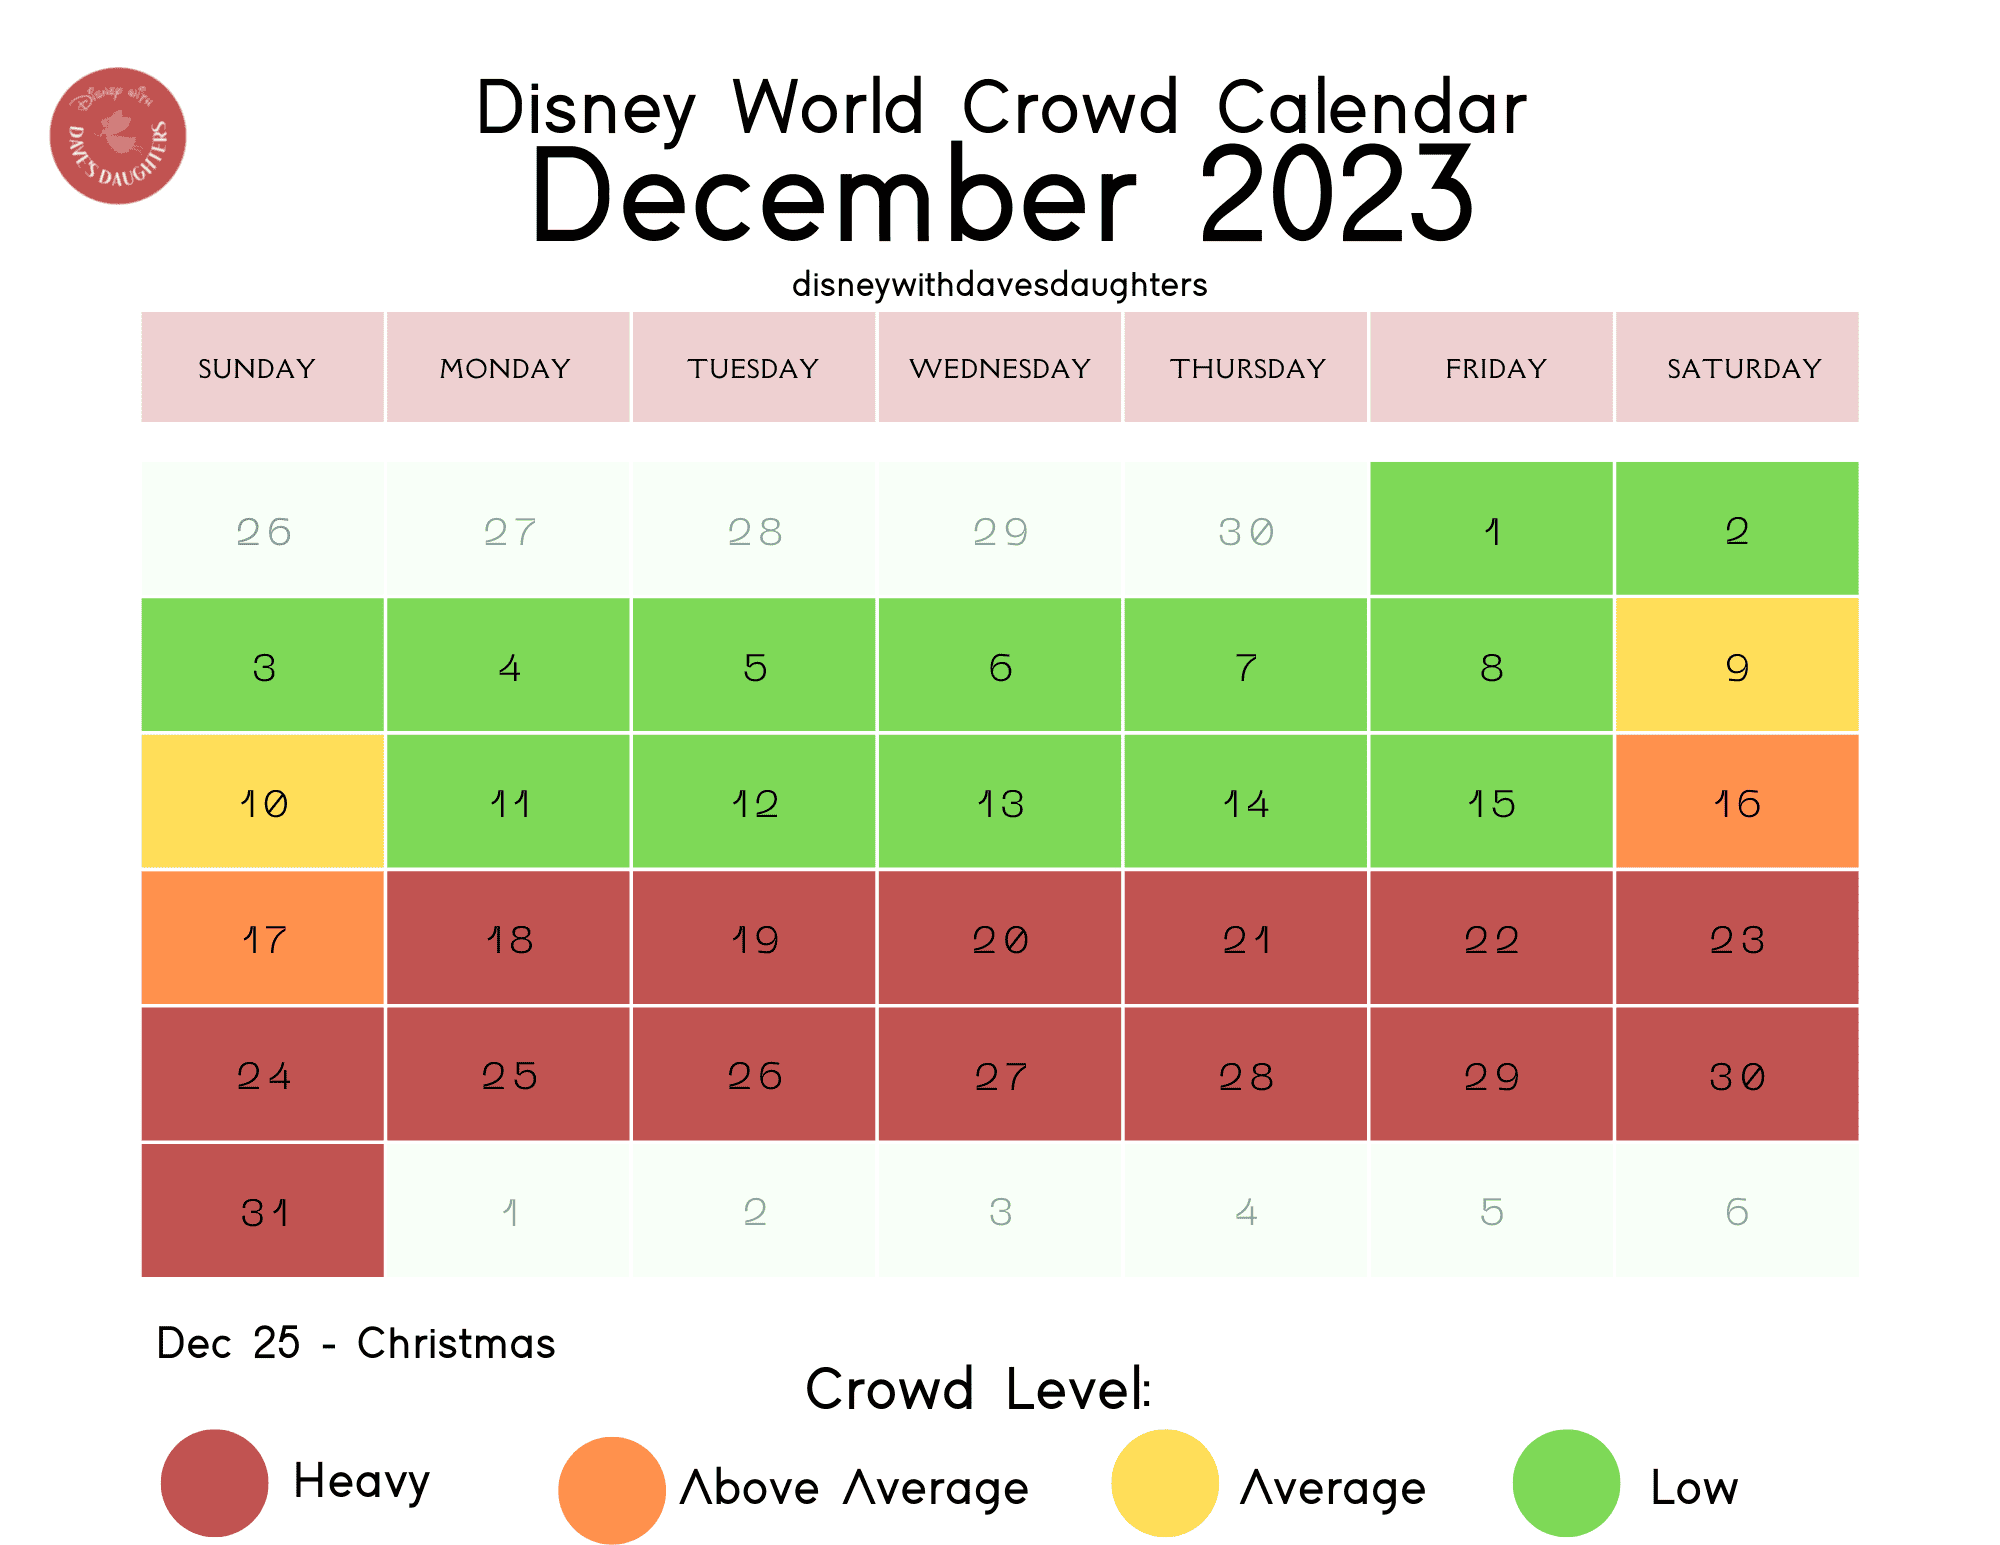 December 2023 Disney crowd calendar